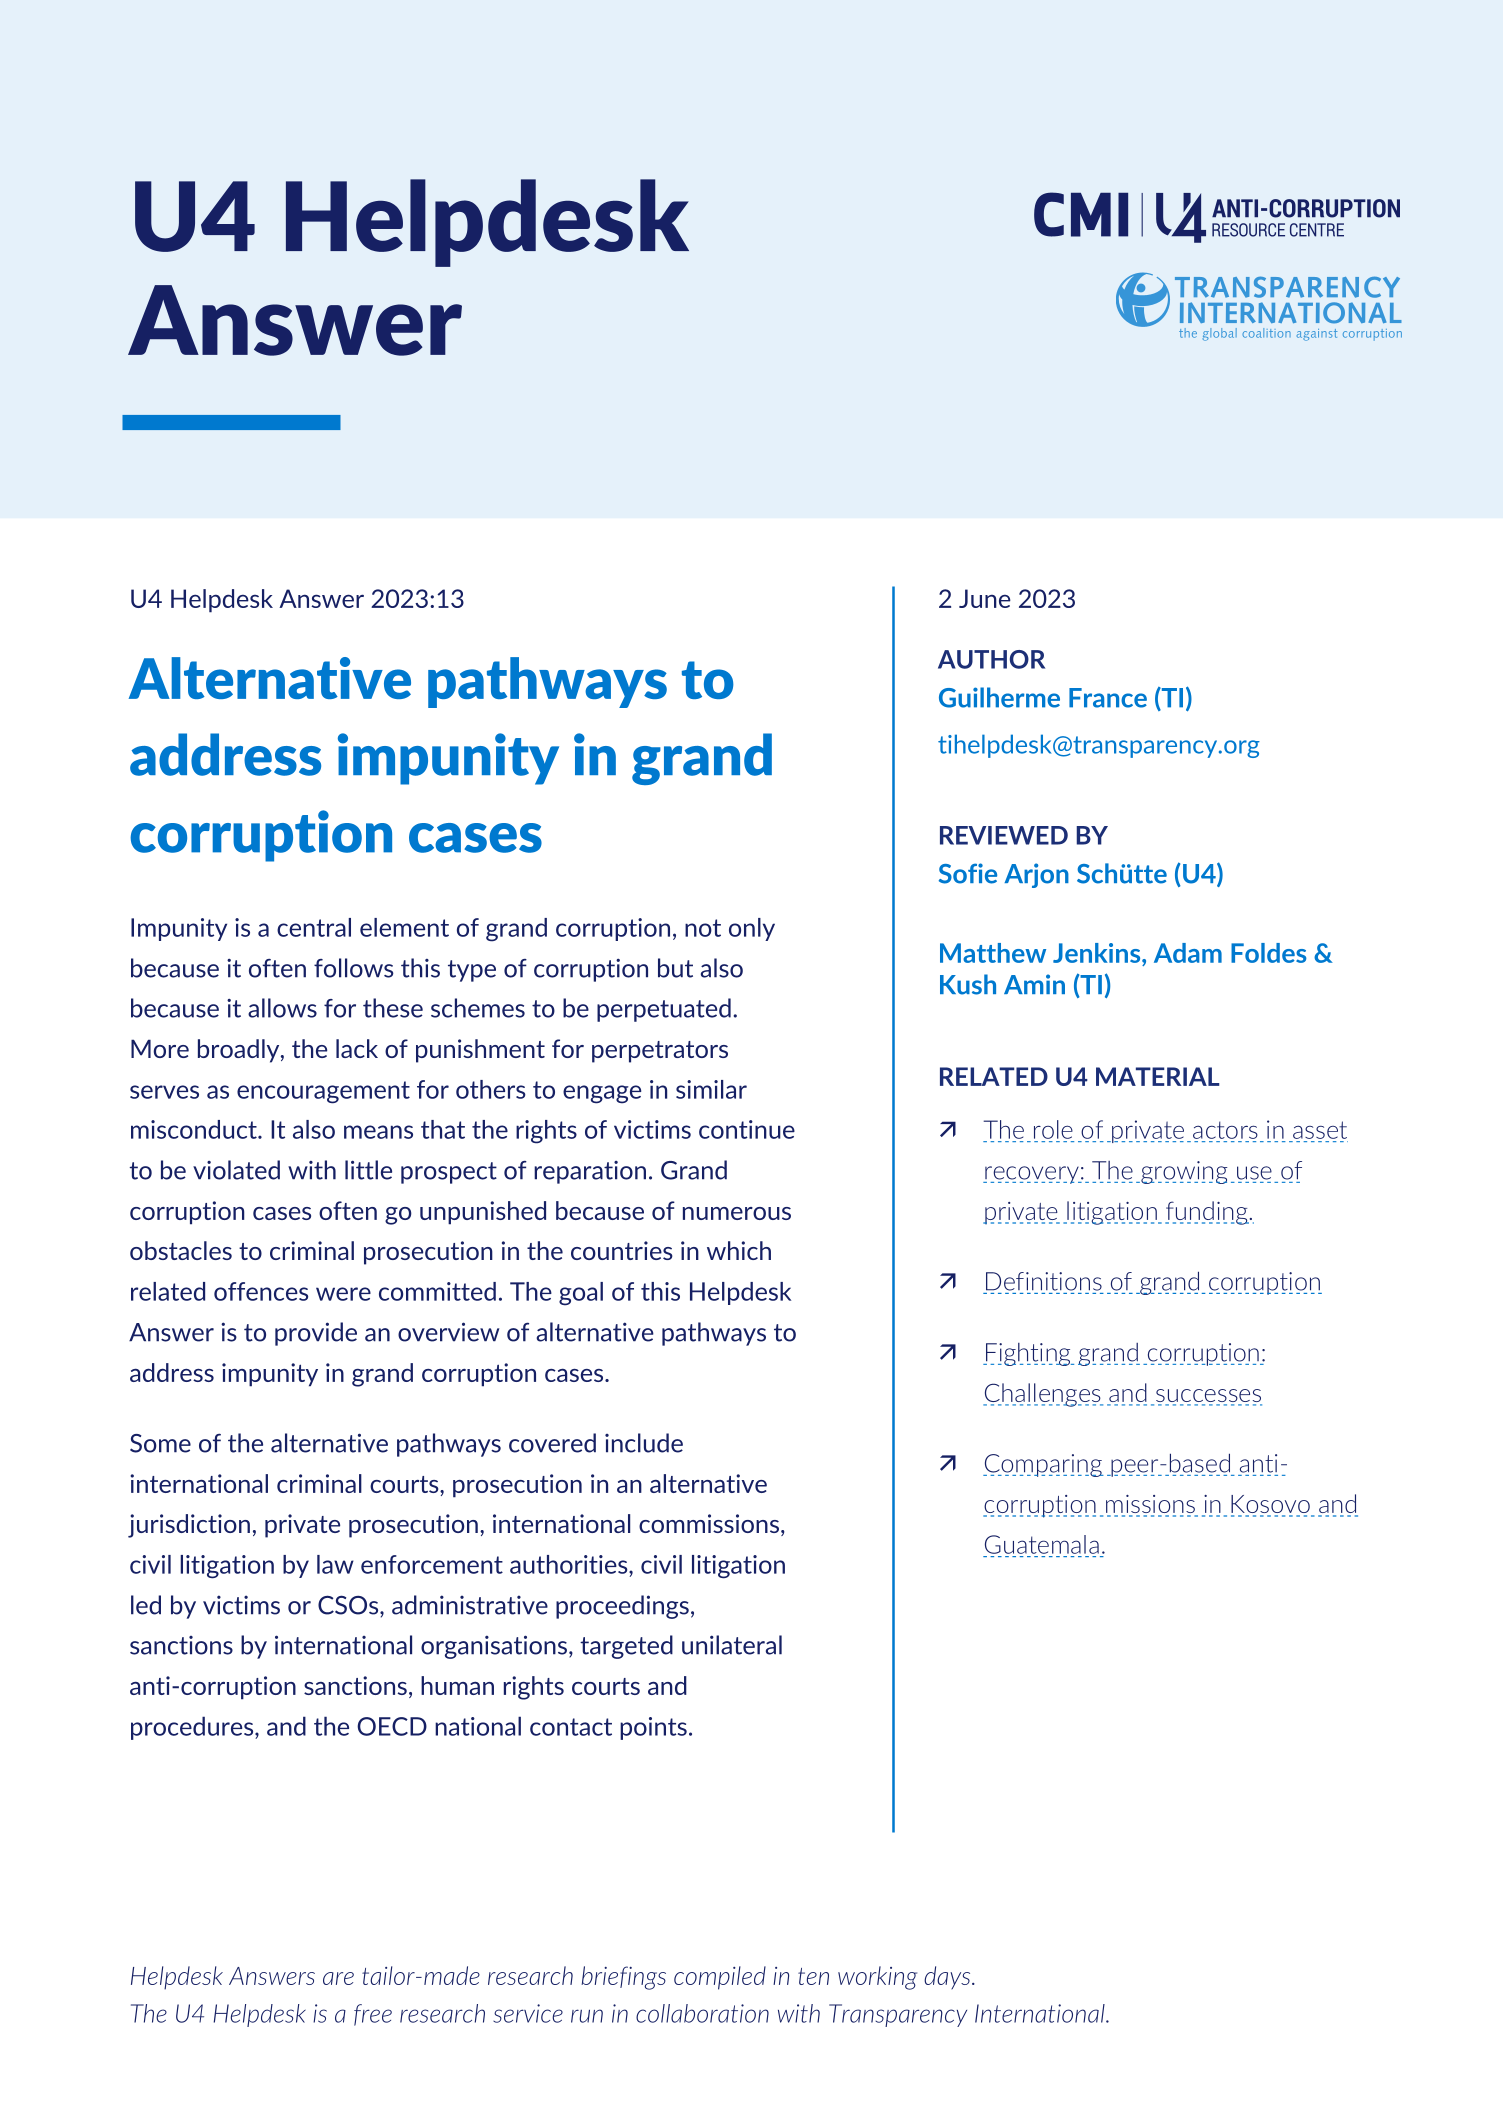 Alternative pathways to address impunity in grand corruption cases